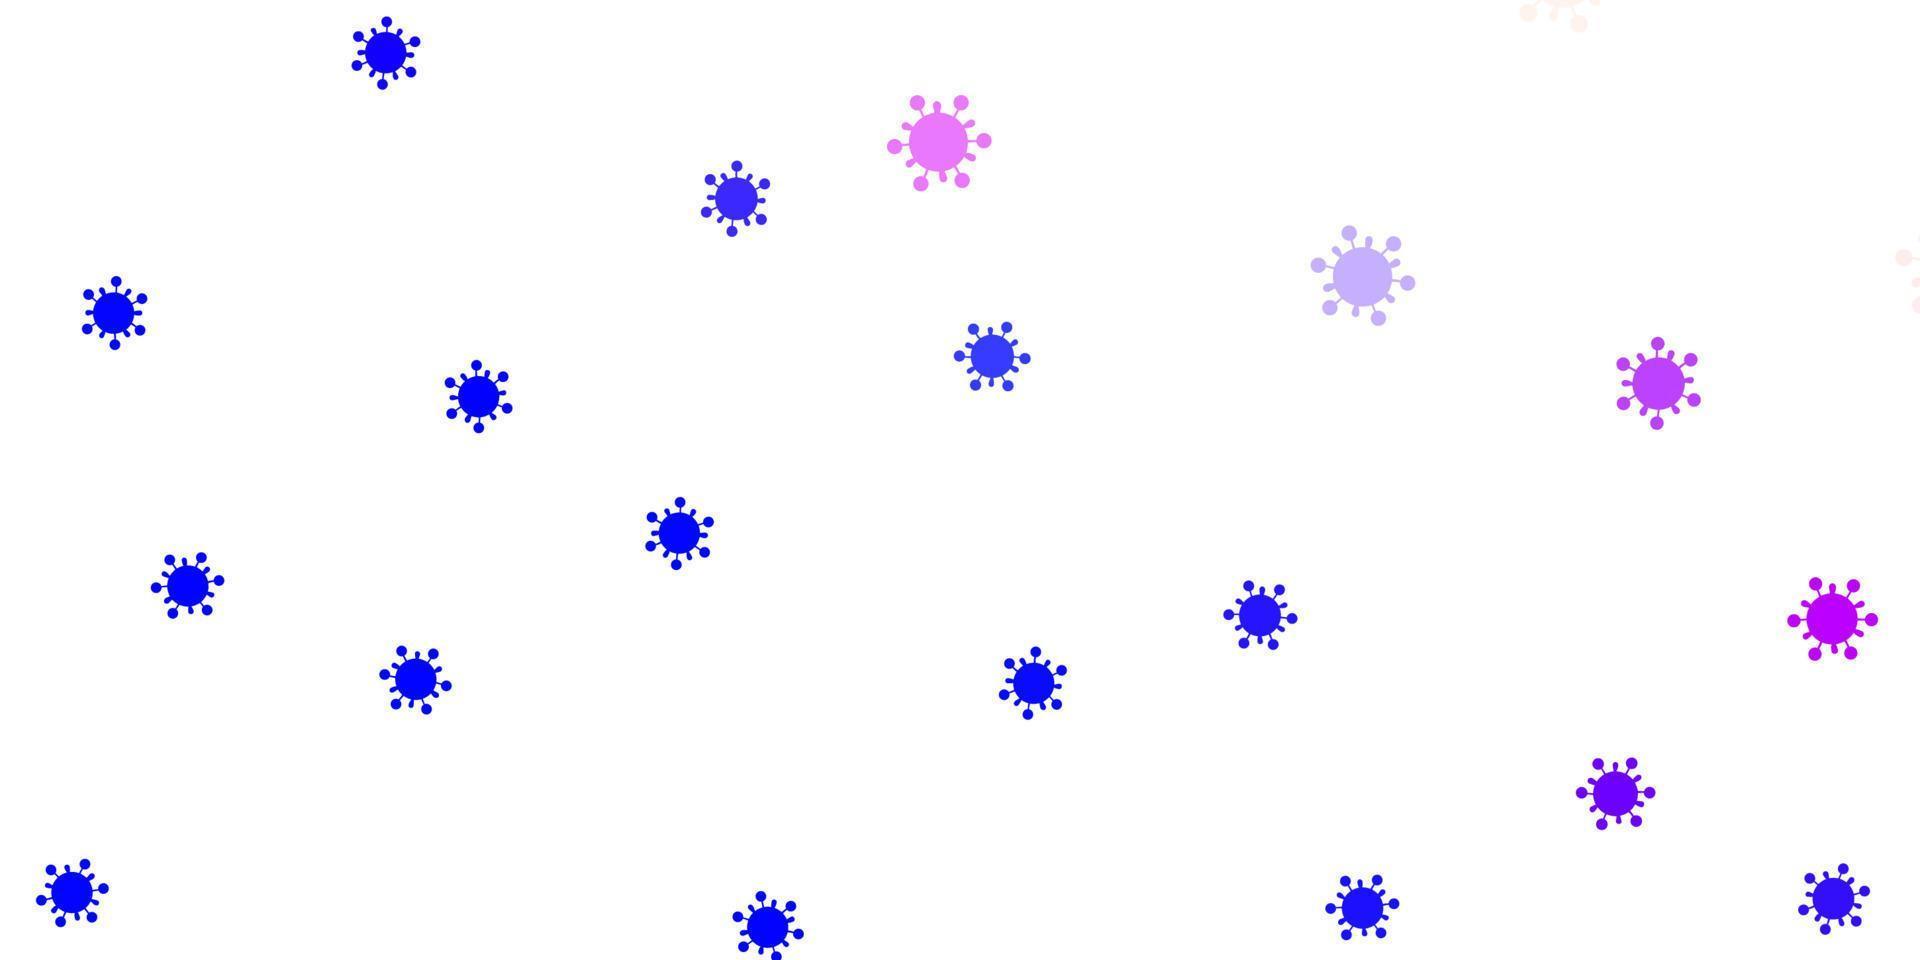 texture de vecteur rose clair, bleu avec des symboles de la maladie.